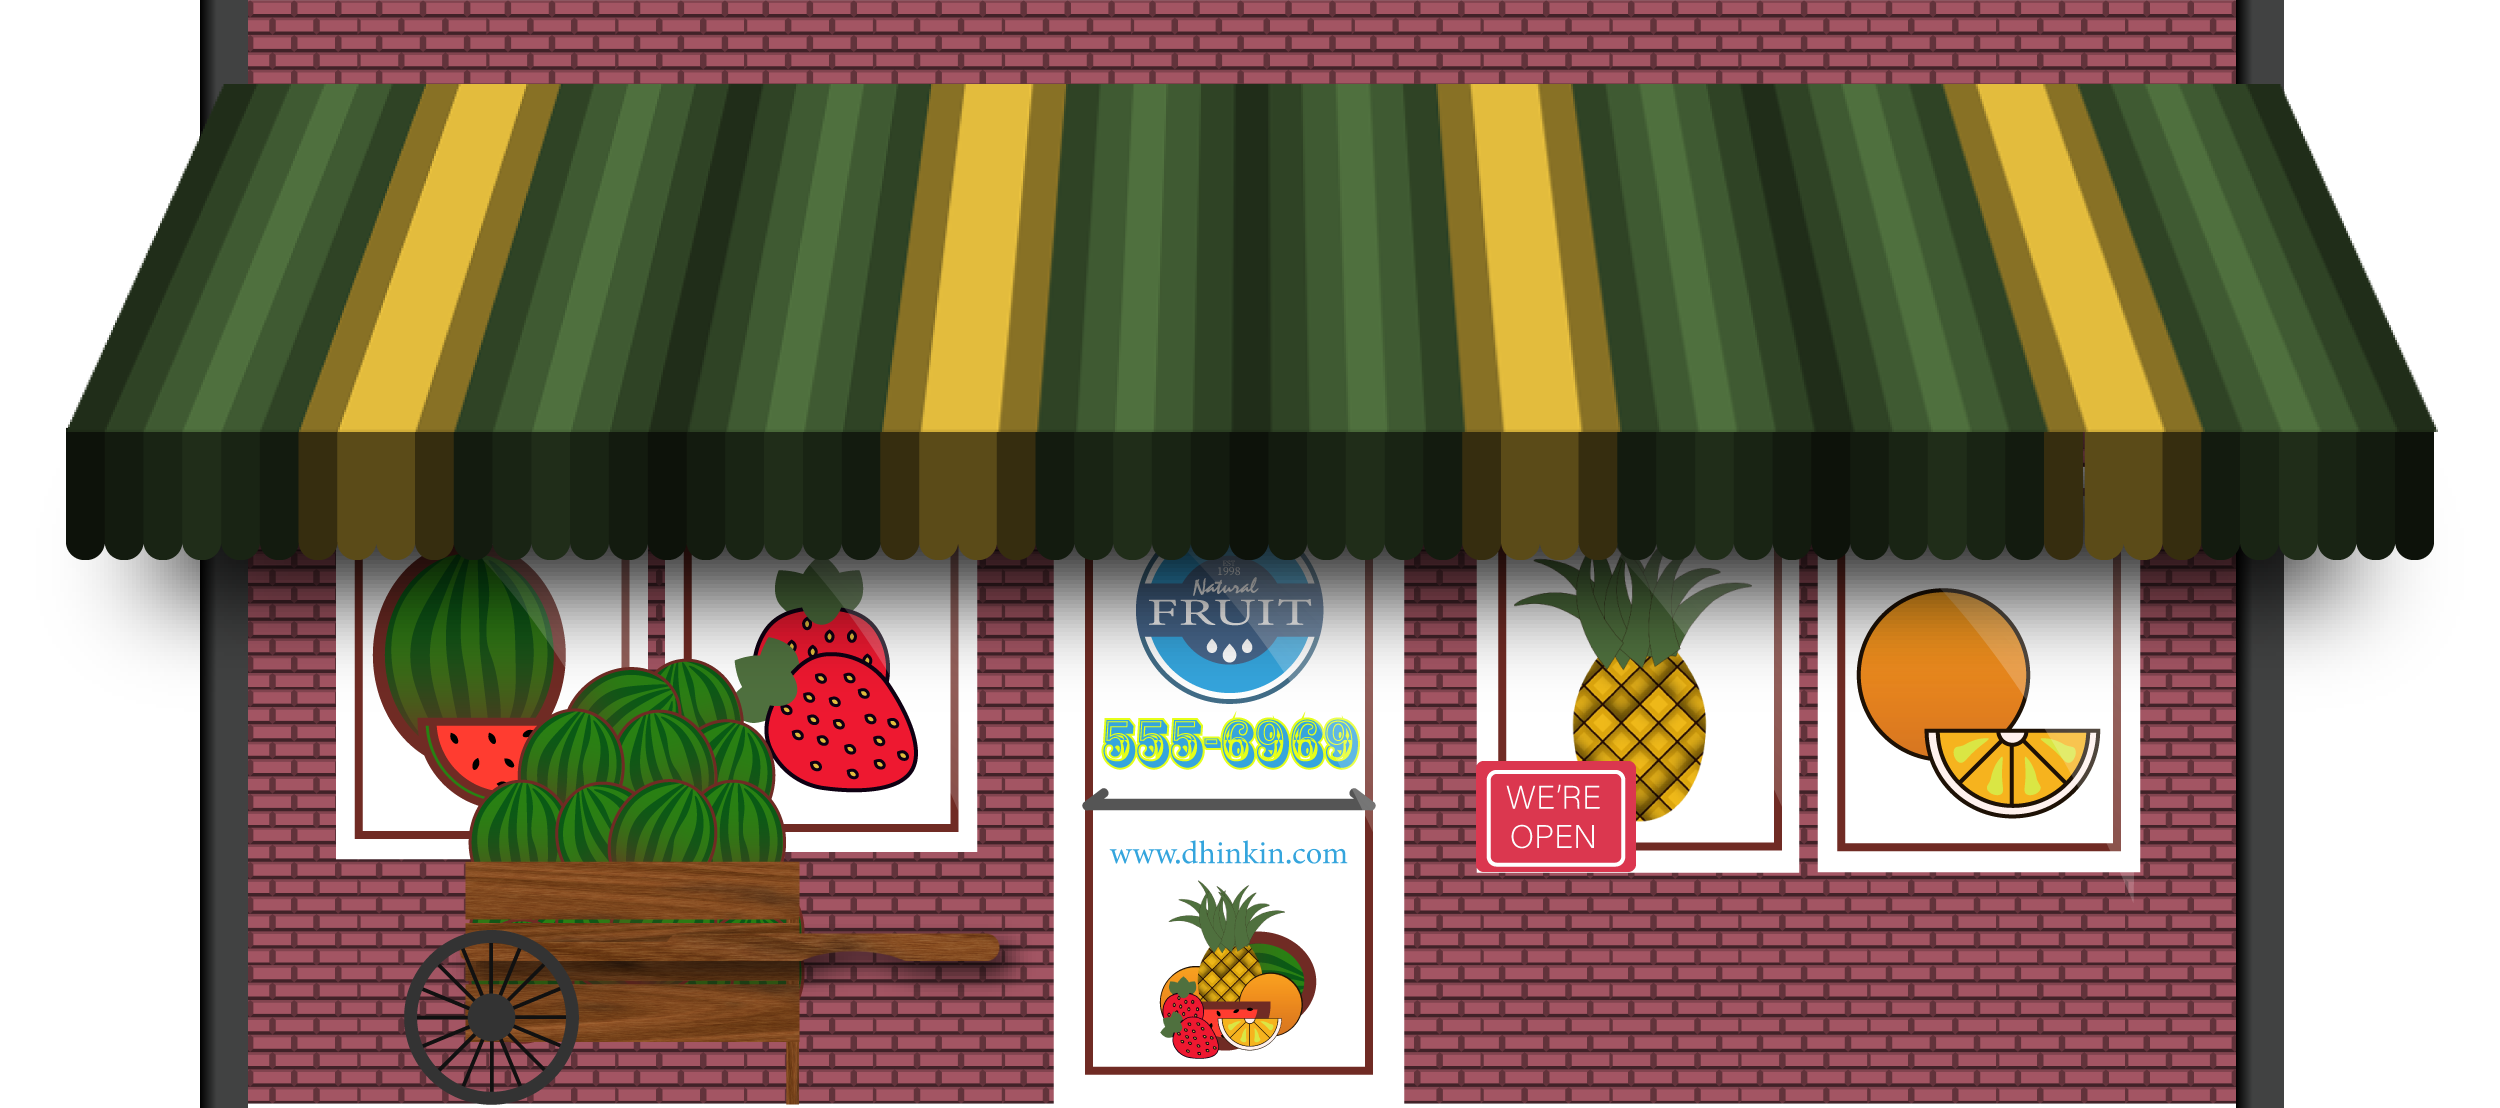 fruit store dhinkin.com